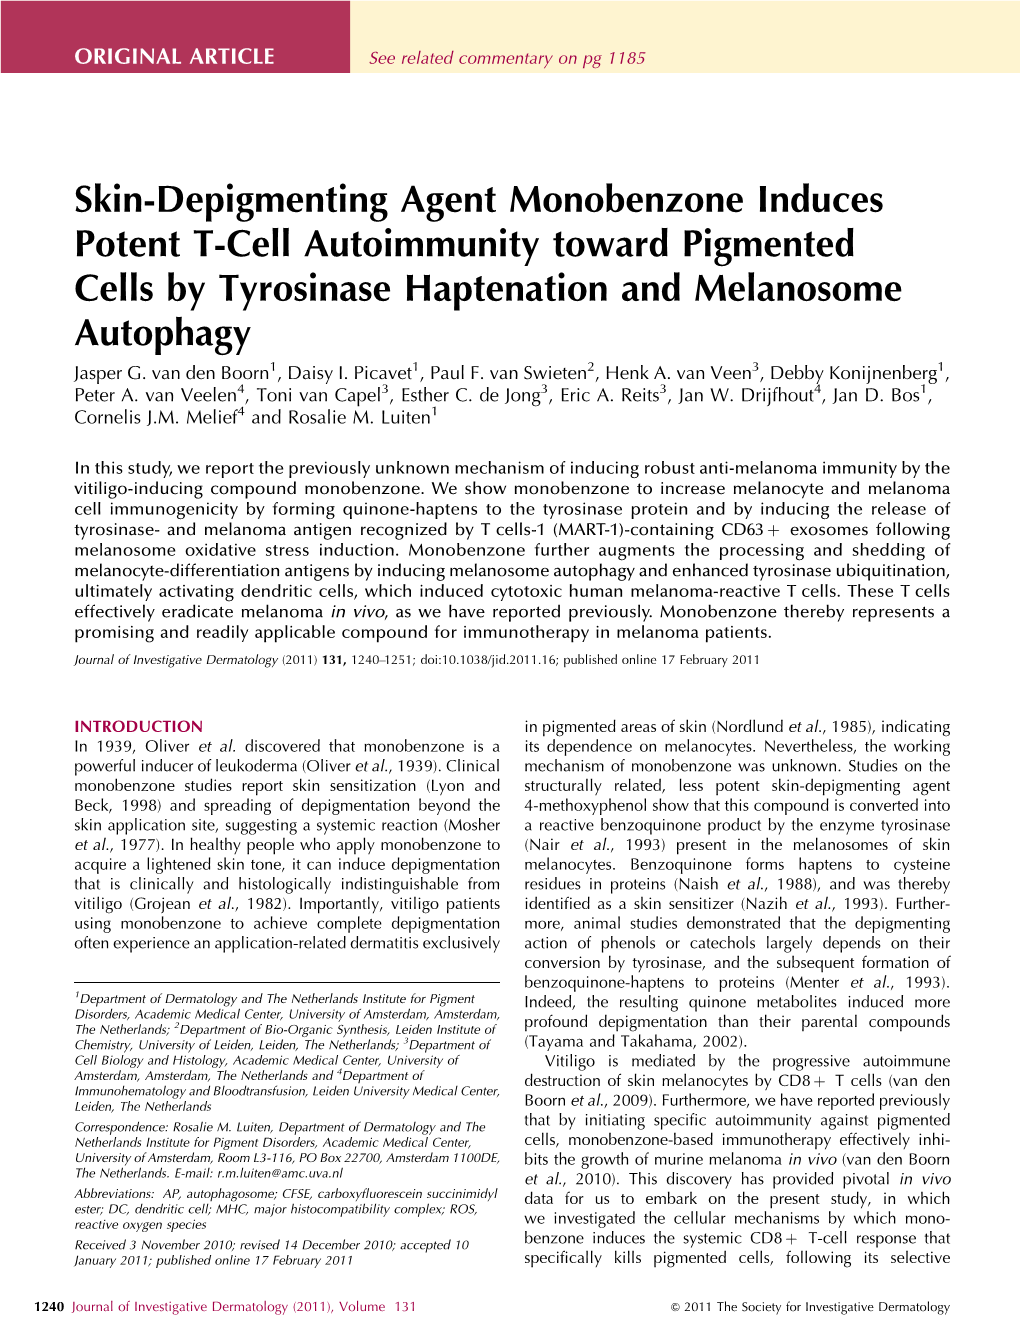 Skin-Depigmenting Agent Monobenzone Induces Potent T-Cell Autoimmunity Toward Pigmented Cells by Tyrosinase Haptenation and Melanosome Autophagy Jasper G